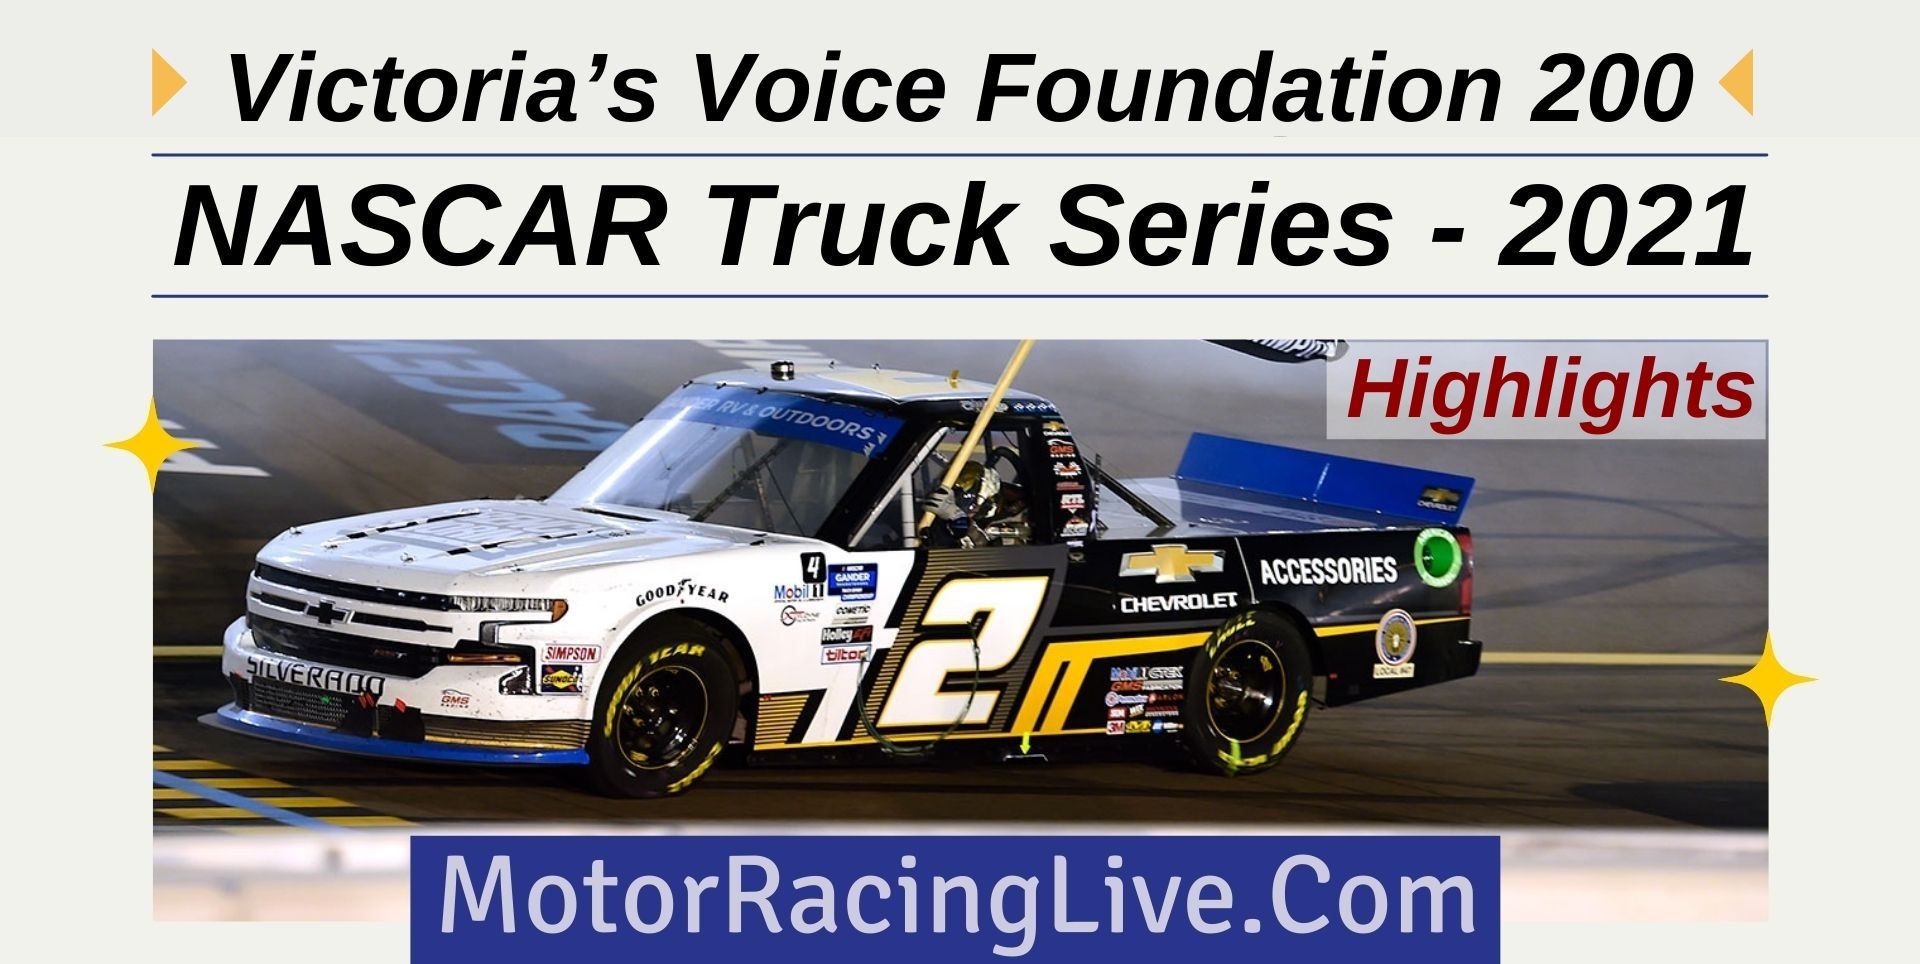 Victorias Voice Foundation 200 Highlights 2021 NASCAR Truck